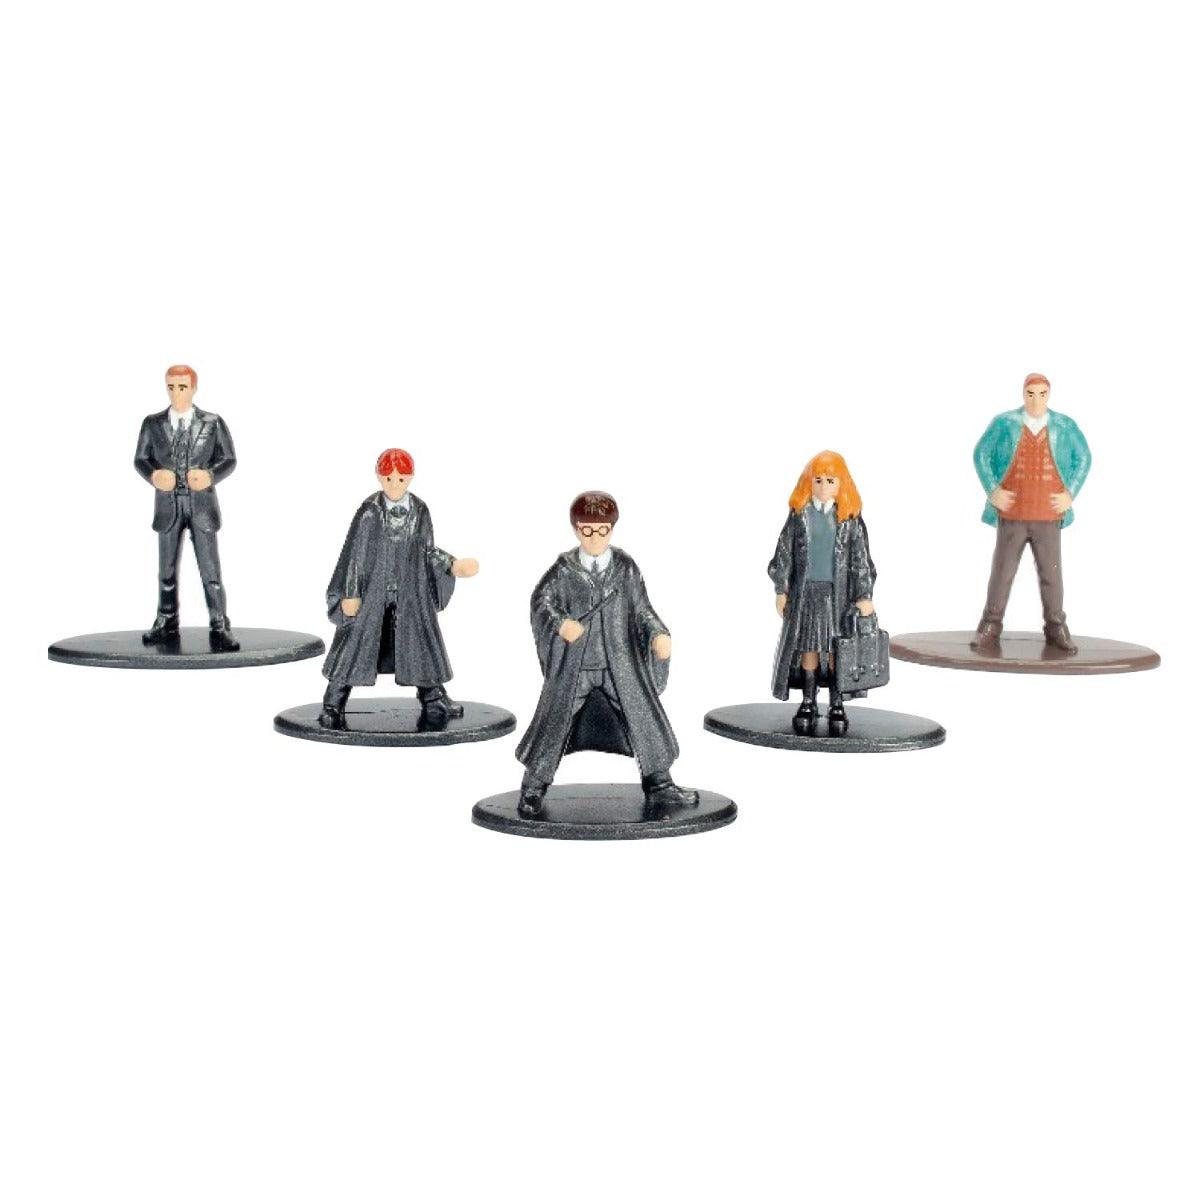 Jada Toys Harry Potter Figures, Pack of 5